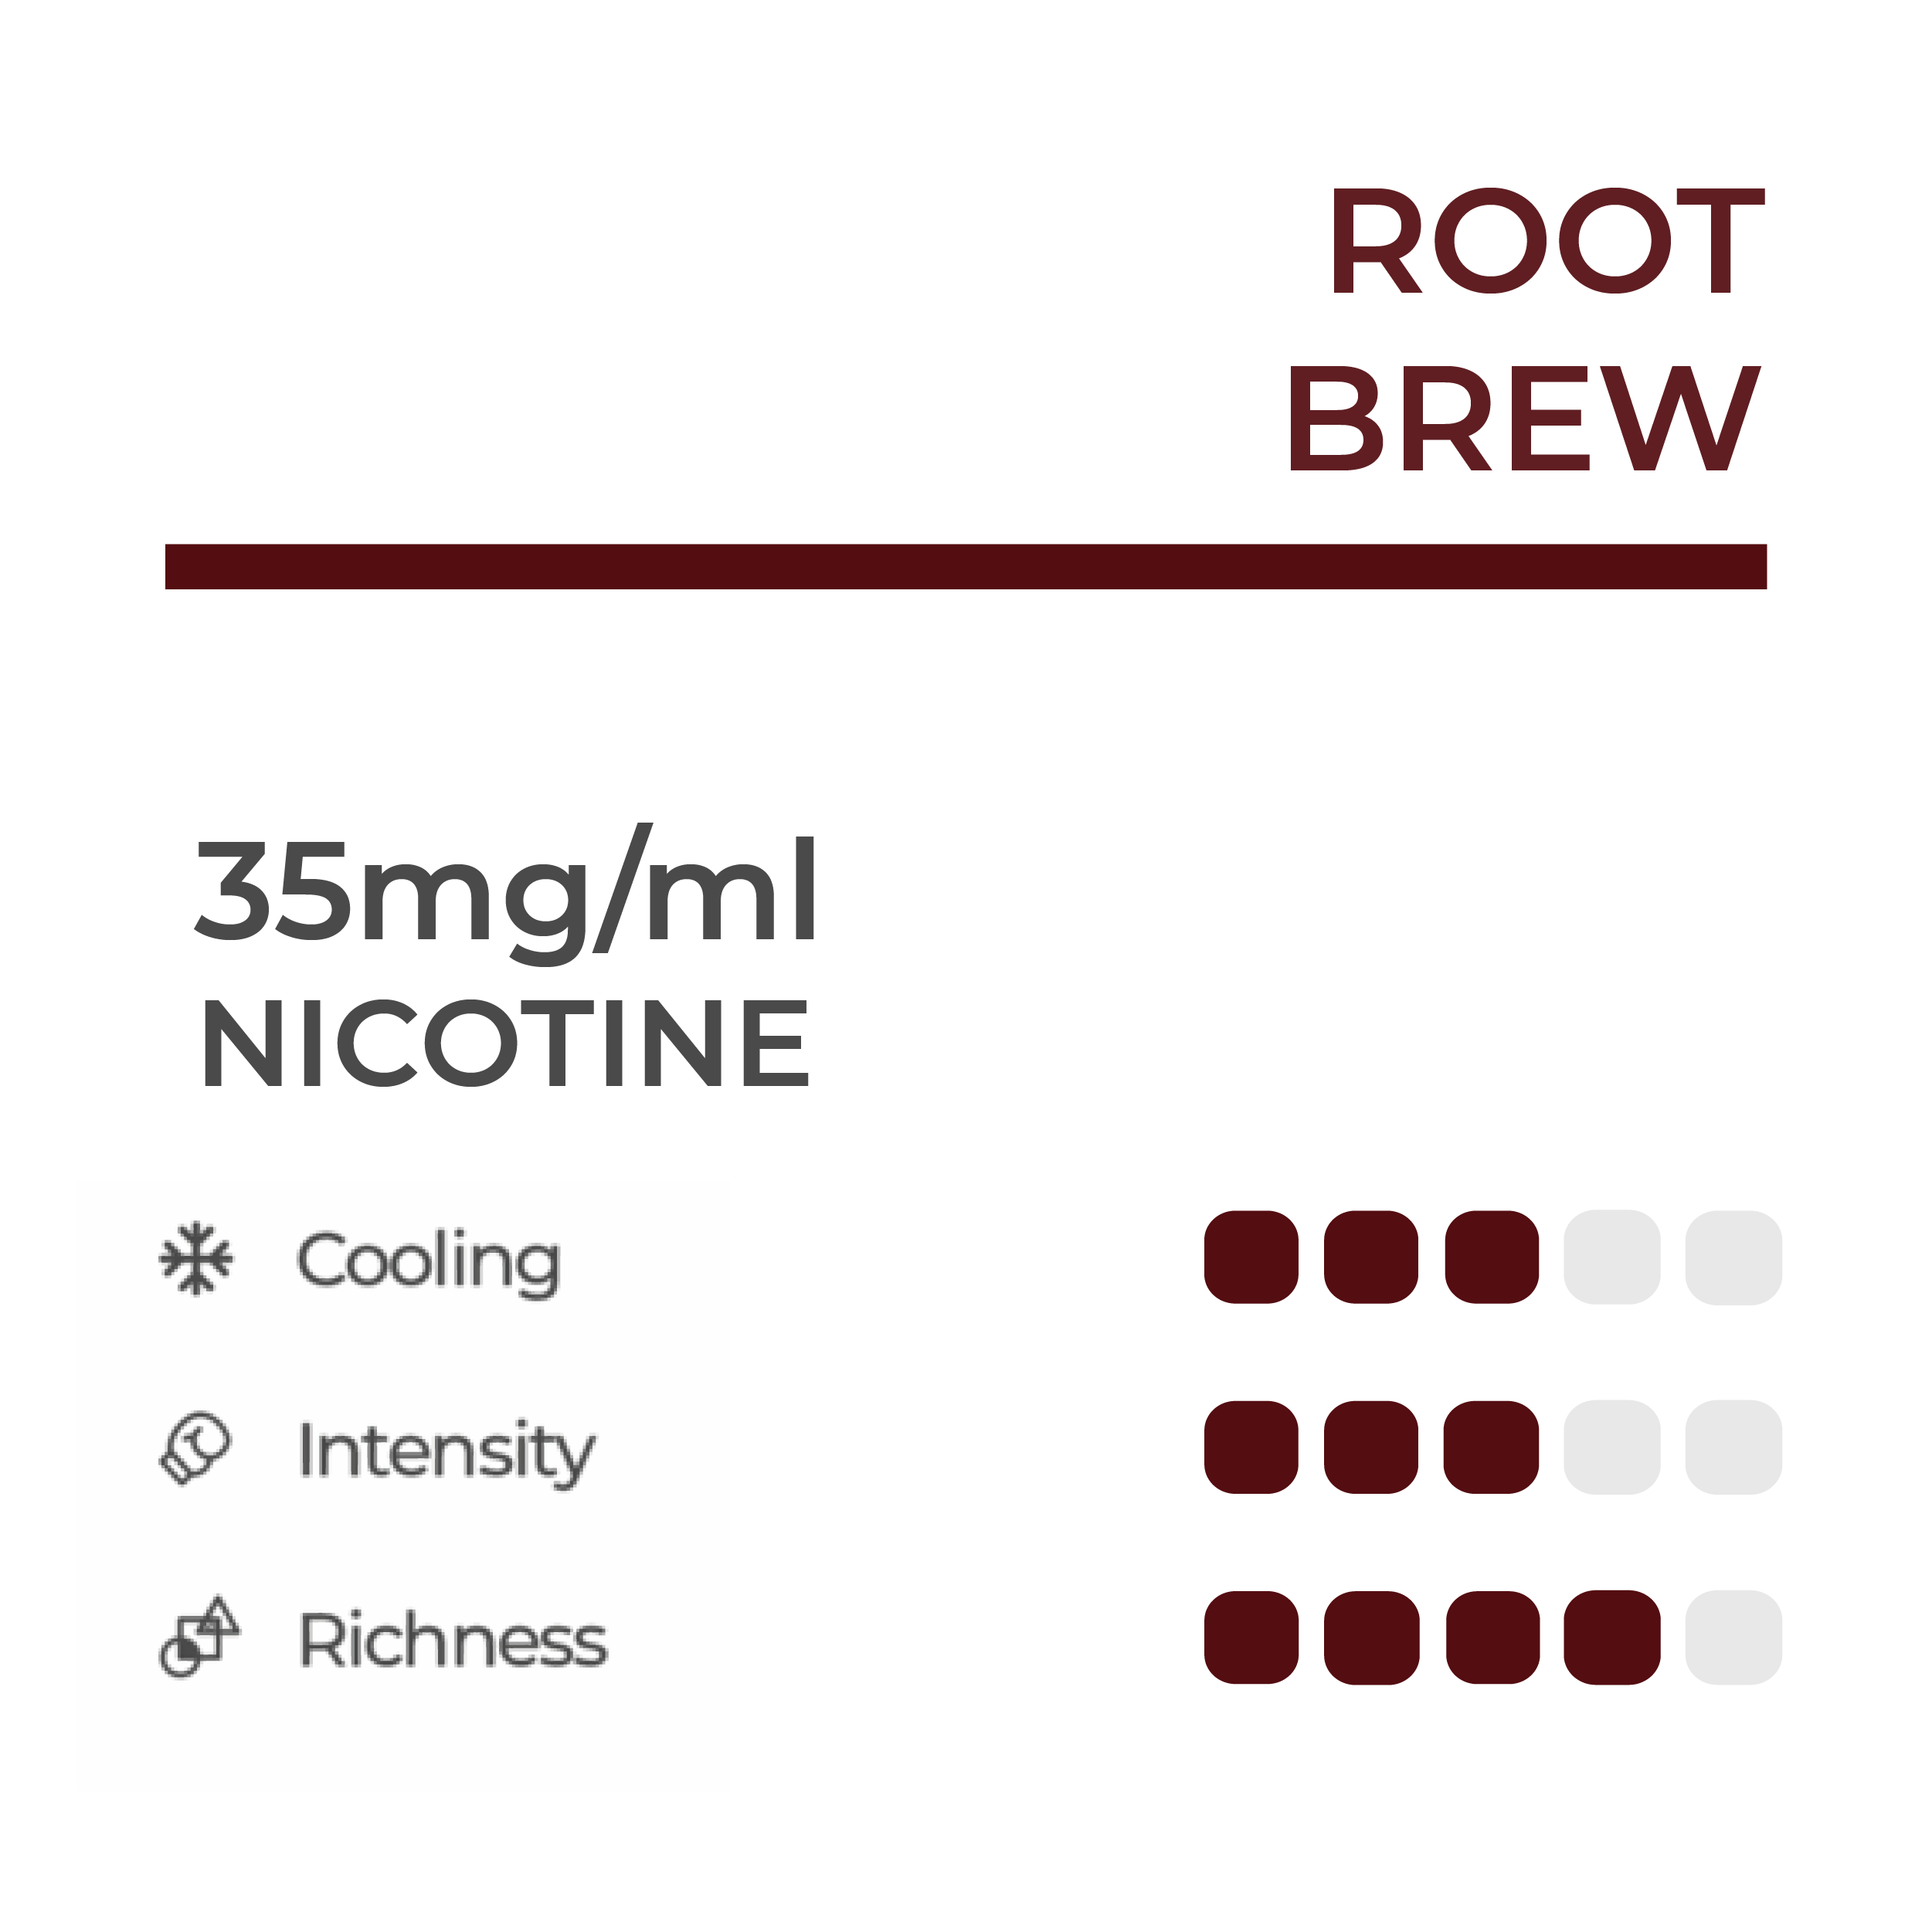 Root Brew (Root Beer) (Carton) 35mg/mL